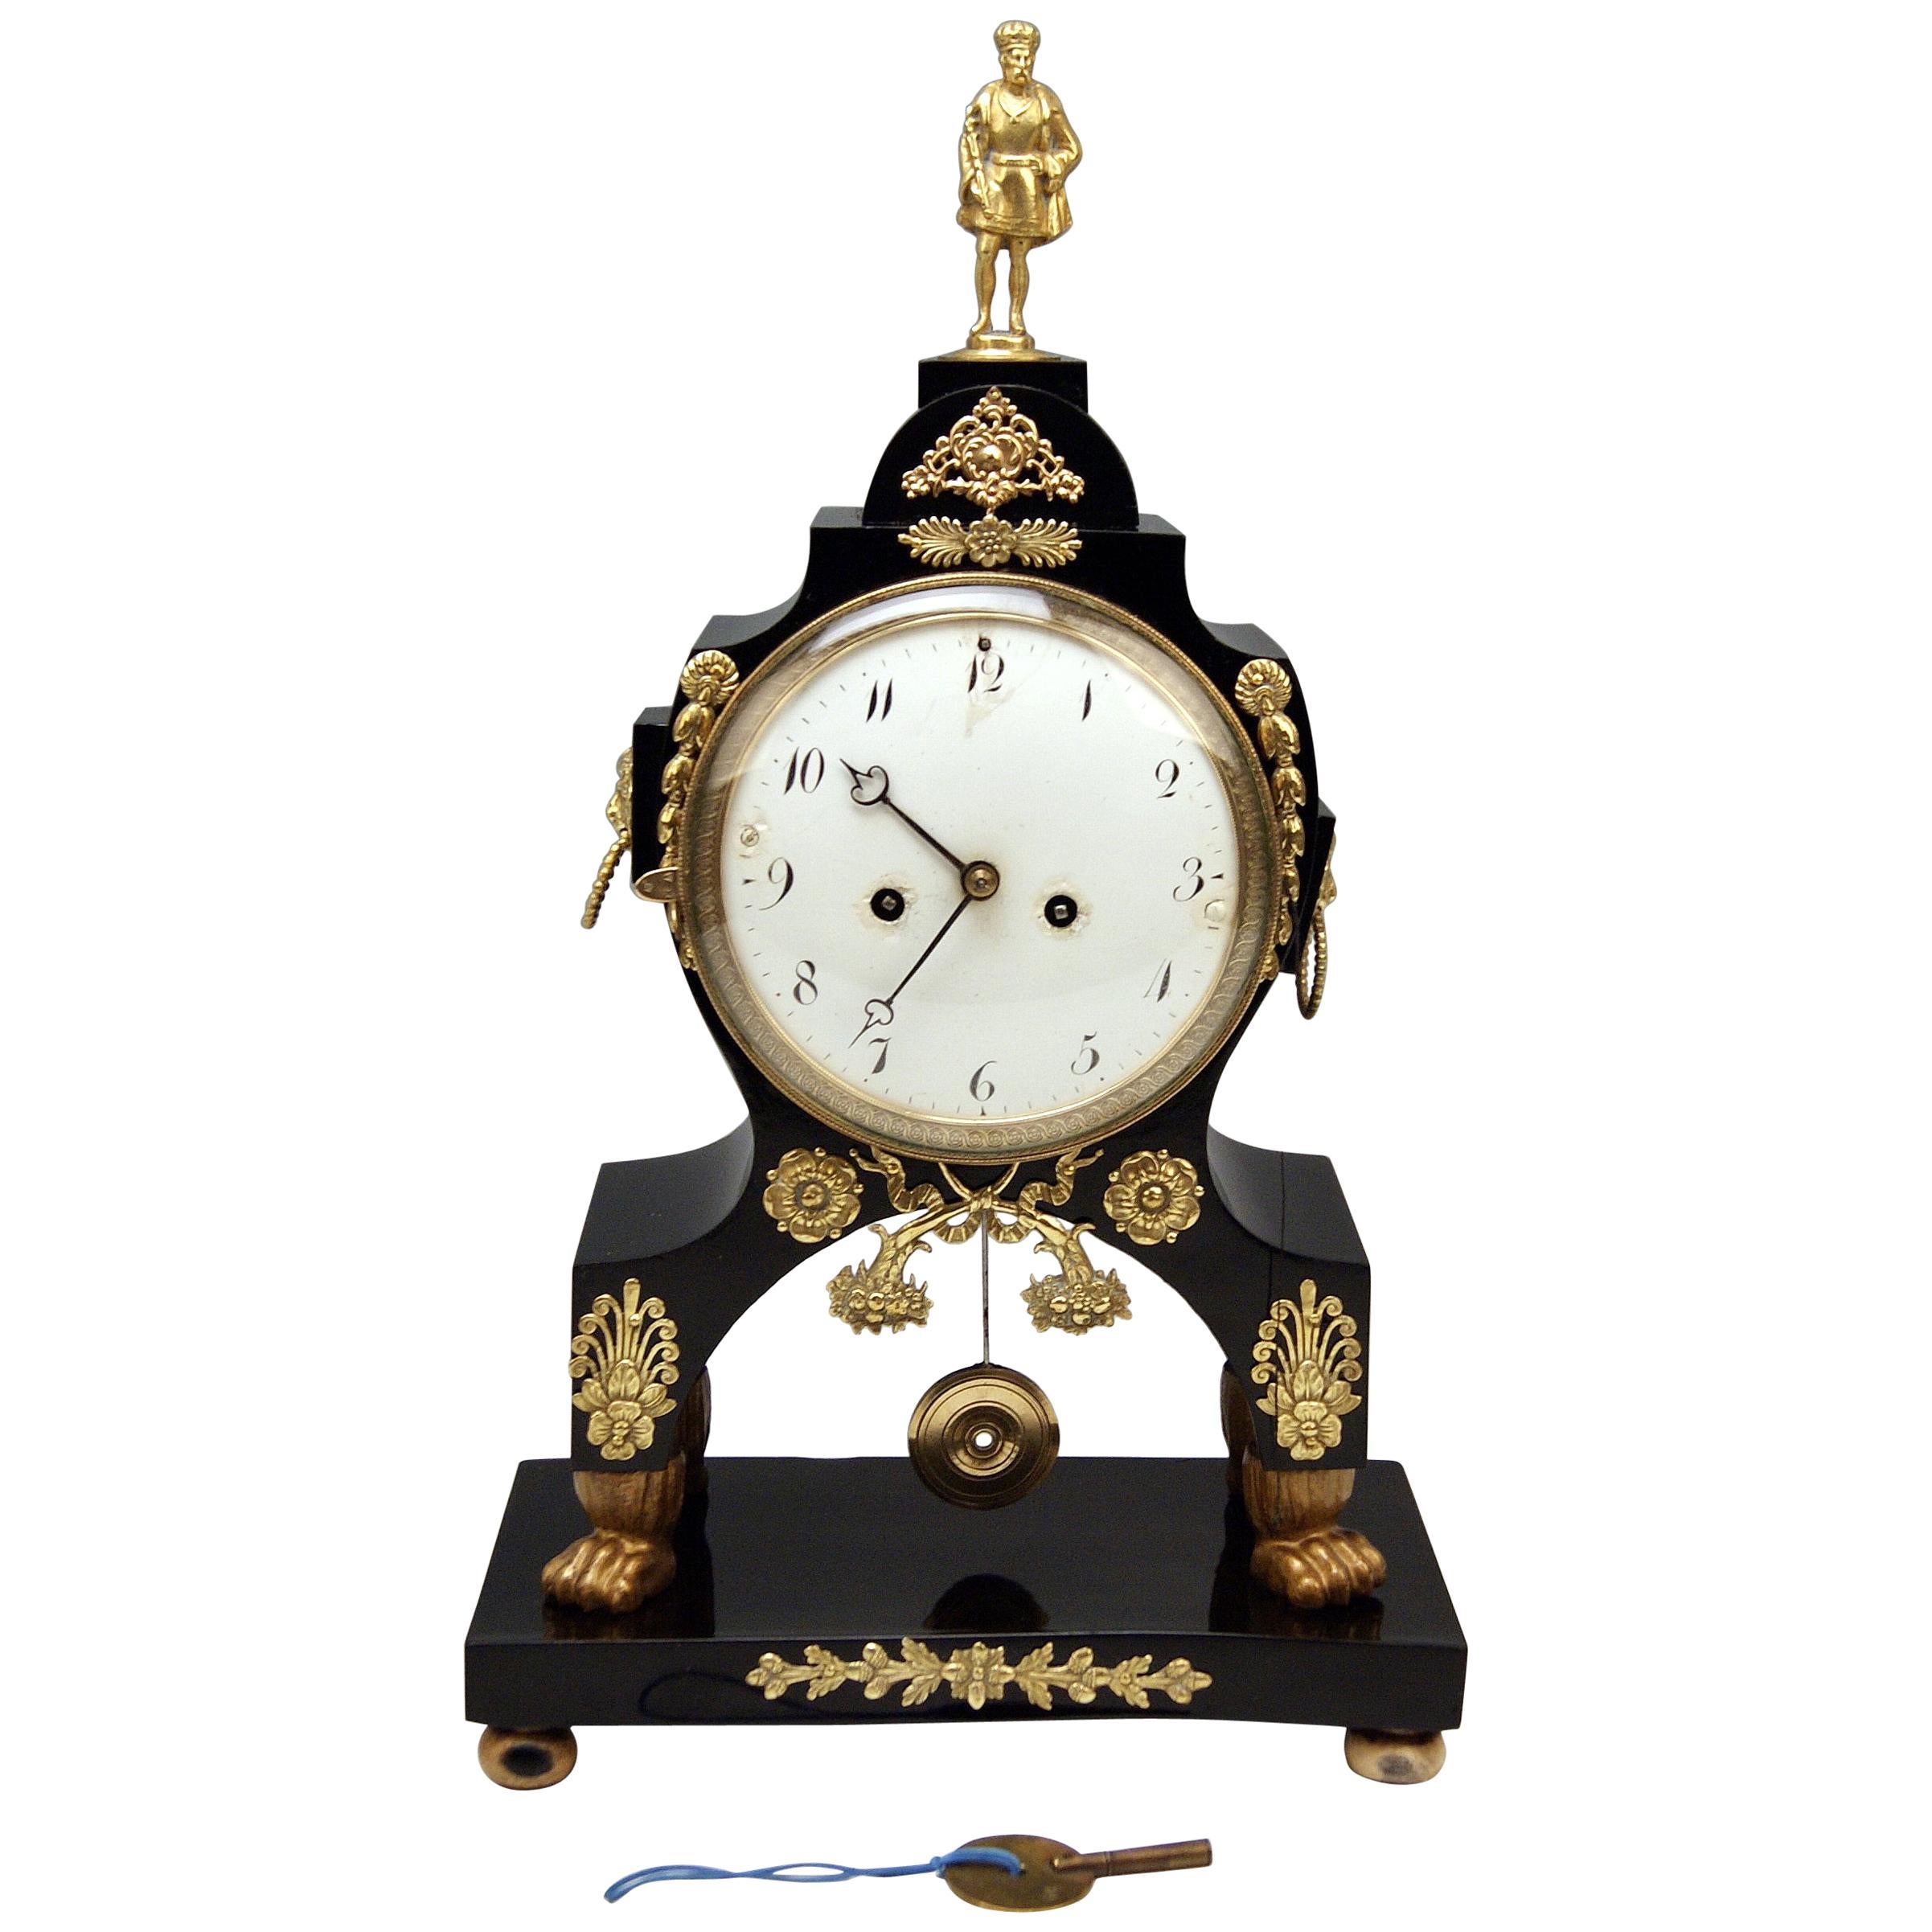 Mantle Mantel Table Chiming Clock Paws Feet Empire, Austria, Vienna